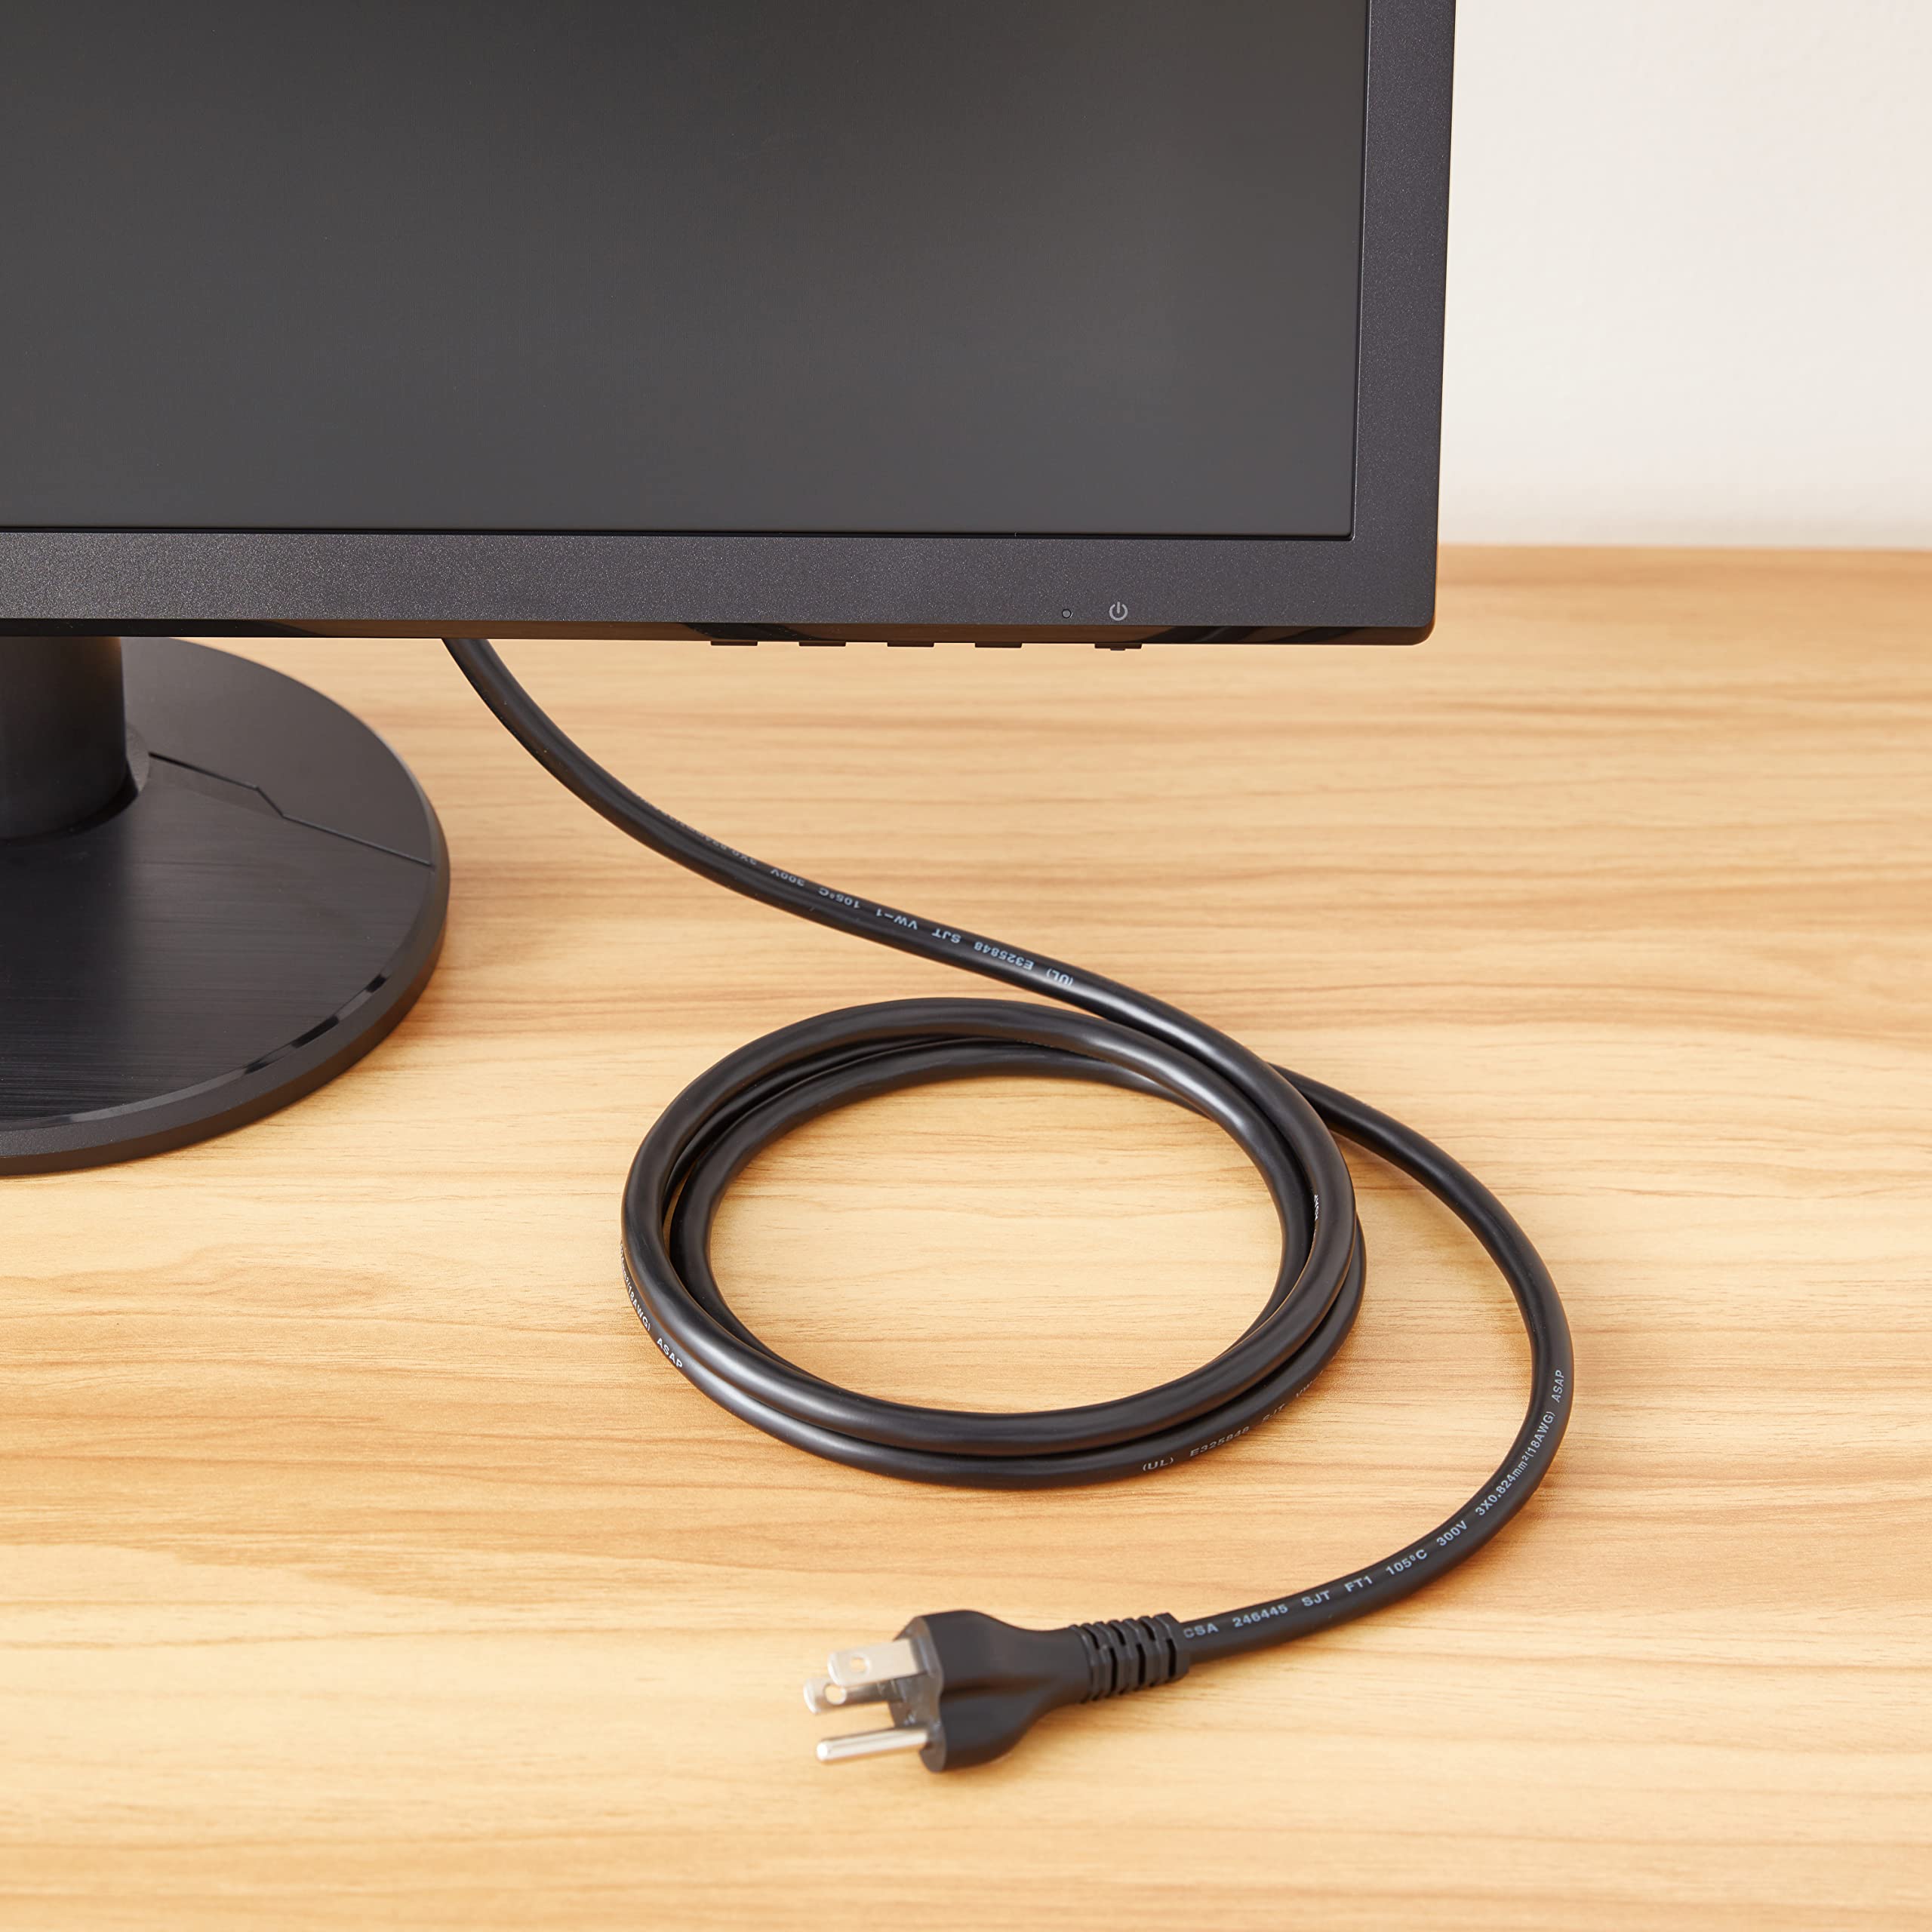 Amazon Basics Computer Monitor TV Replacement Power Cord, 6', Black